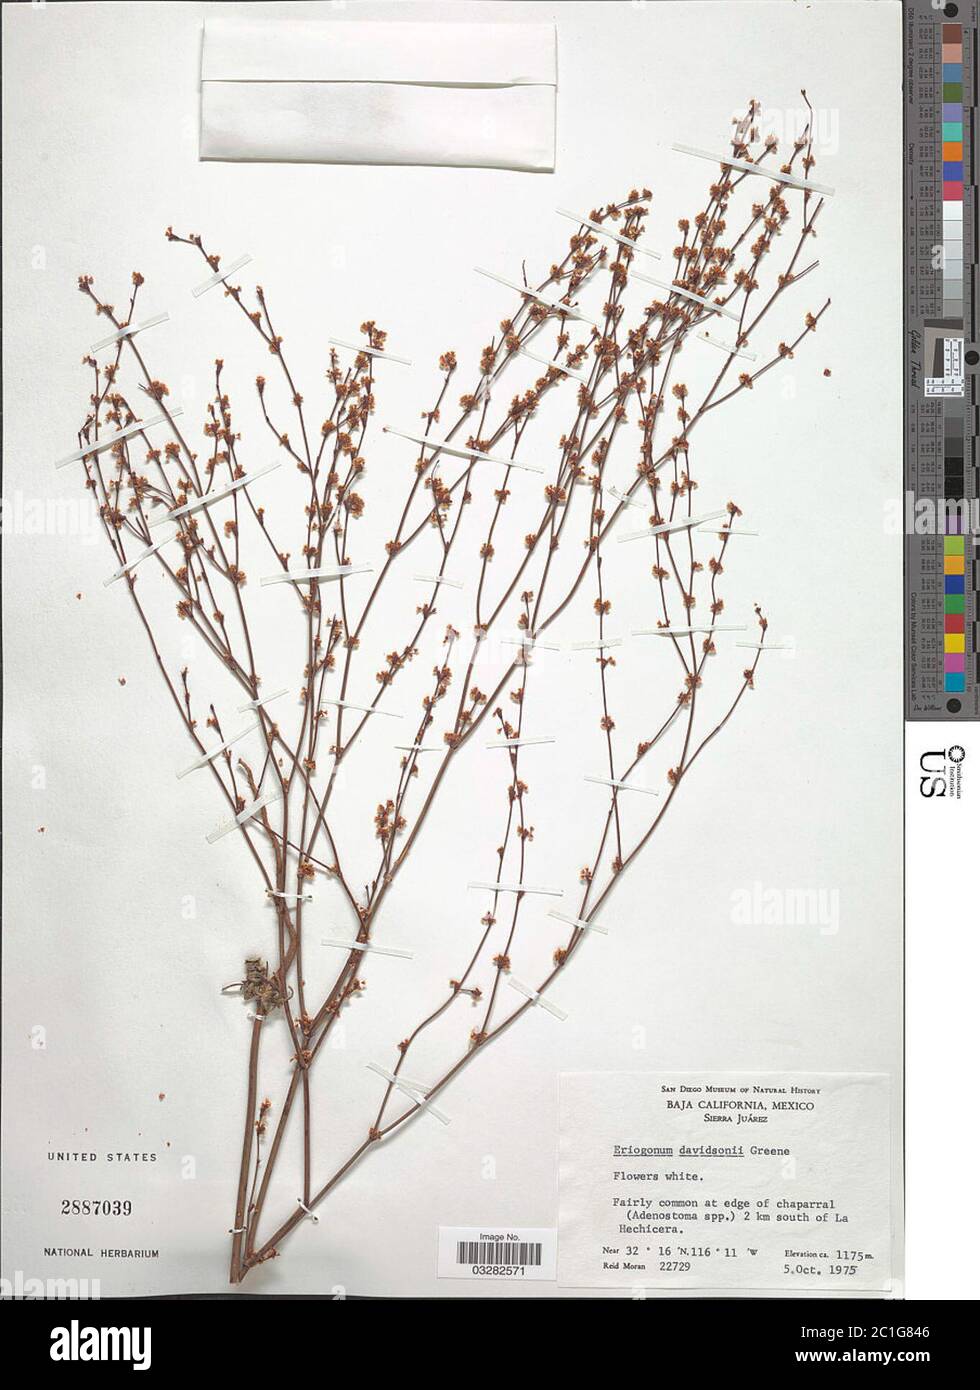 Eriogonum davidsonii Greene Eriogonum davidsonii Greene. Stock Photo